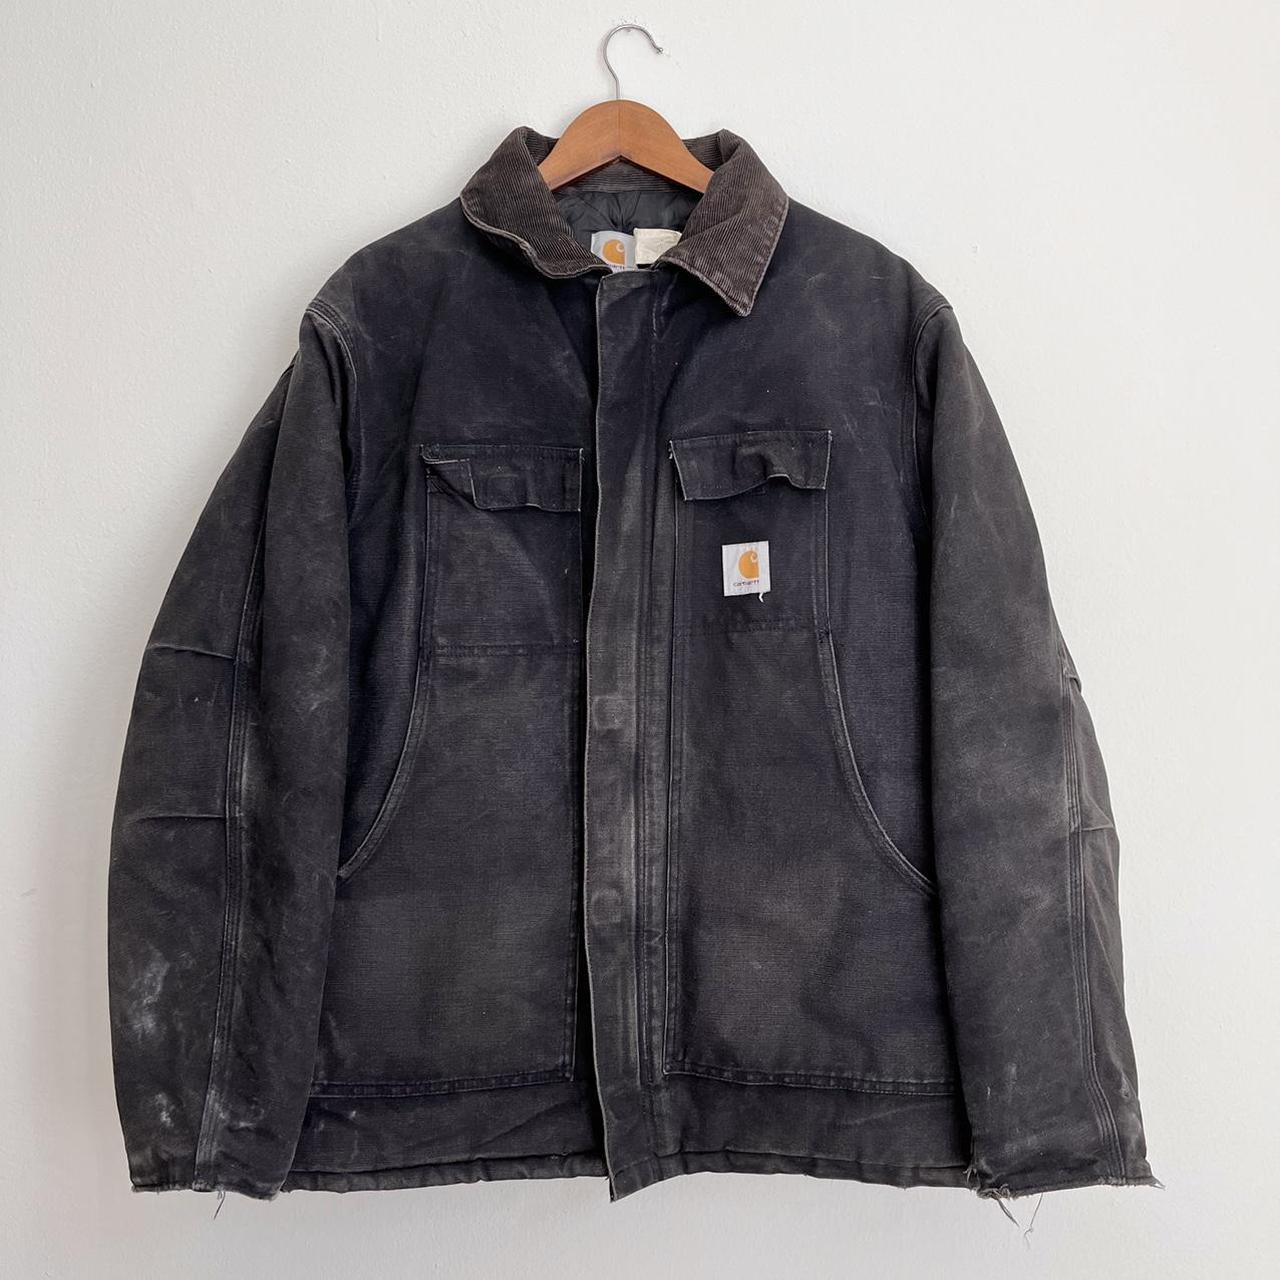 Vintage Carhartt Jacket Black Size 52 Worn... - Depop